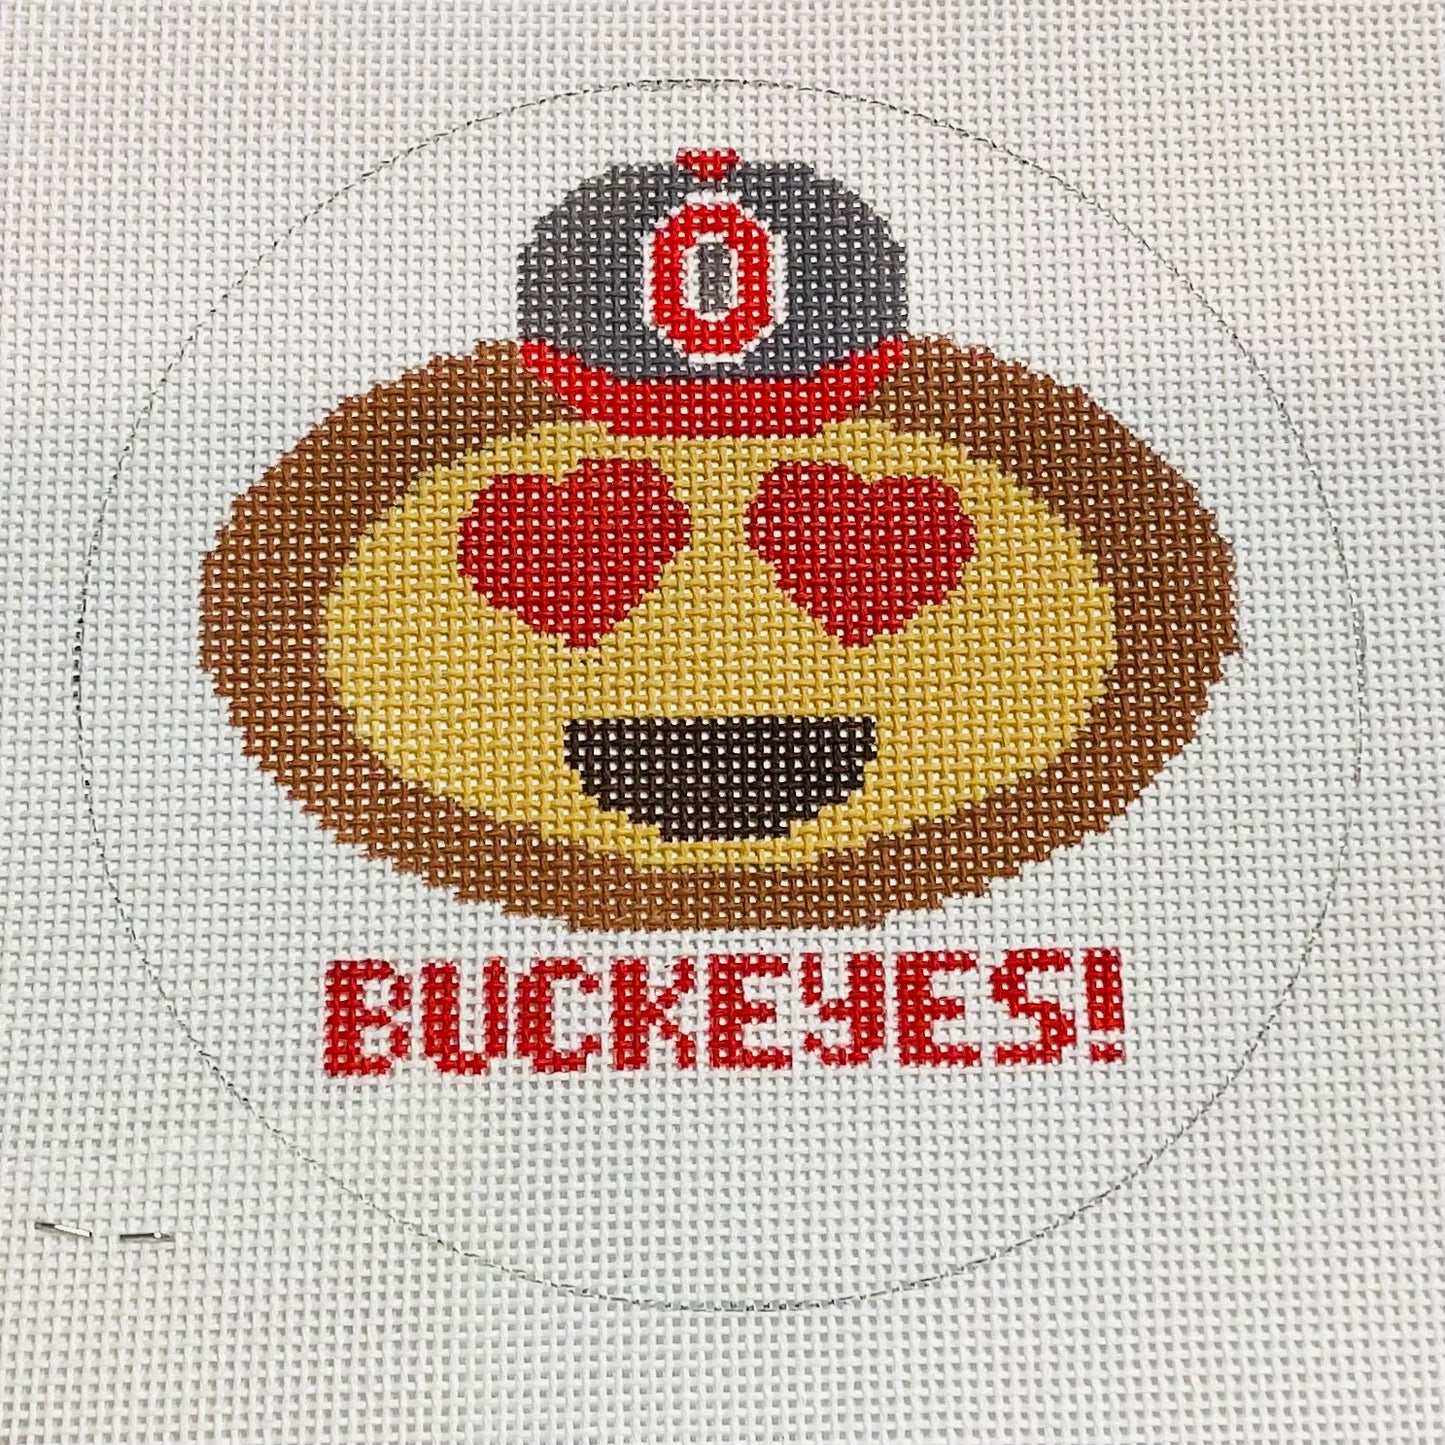 Buckeyes emoji